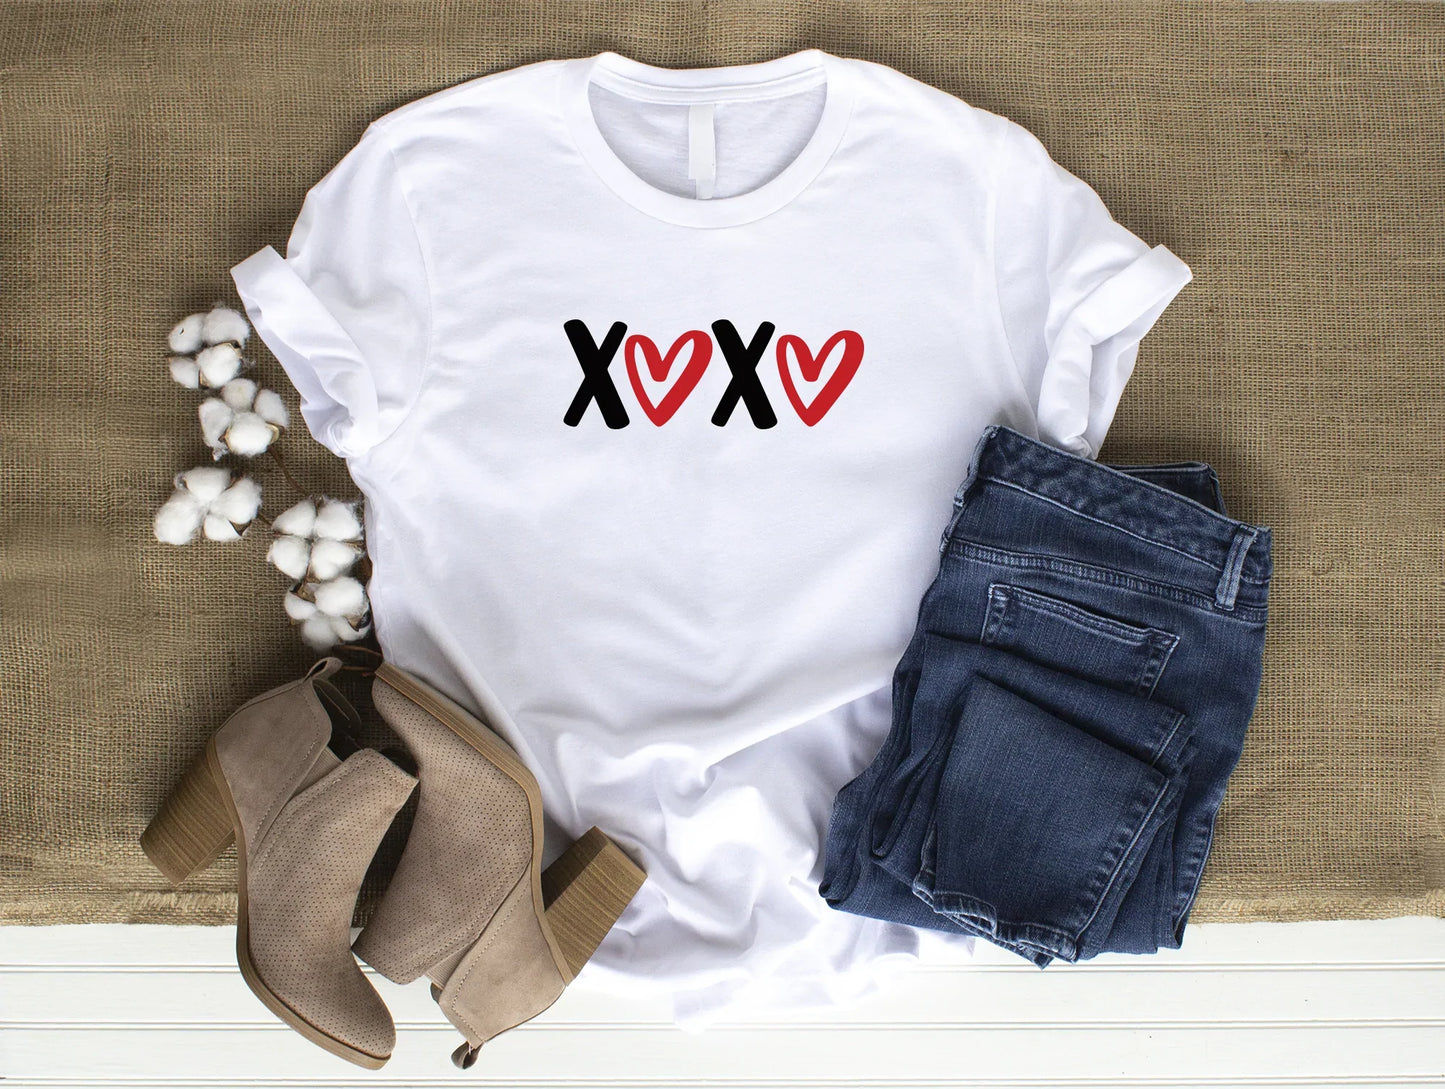 XOXO Plain Cute Comfy Valentine's Day White T-Shirt Large